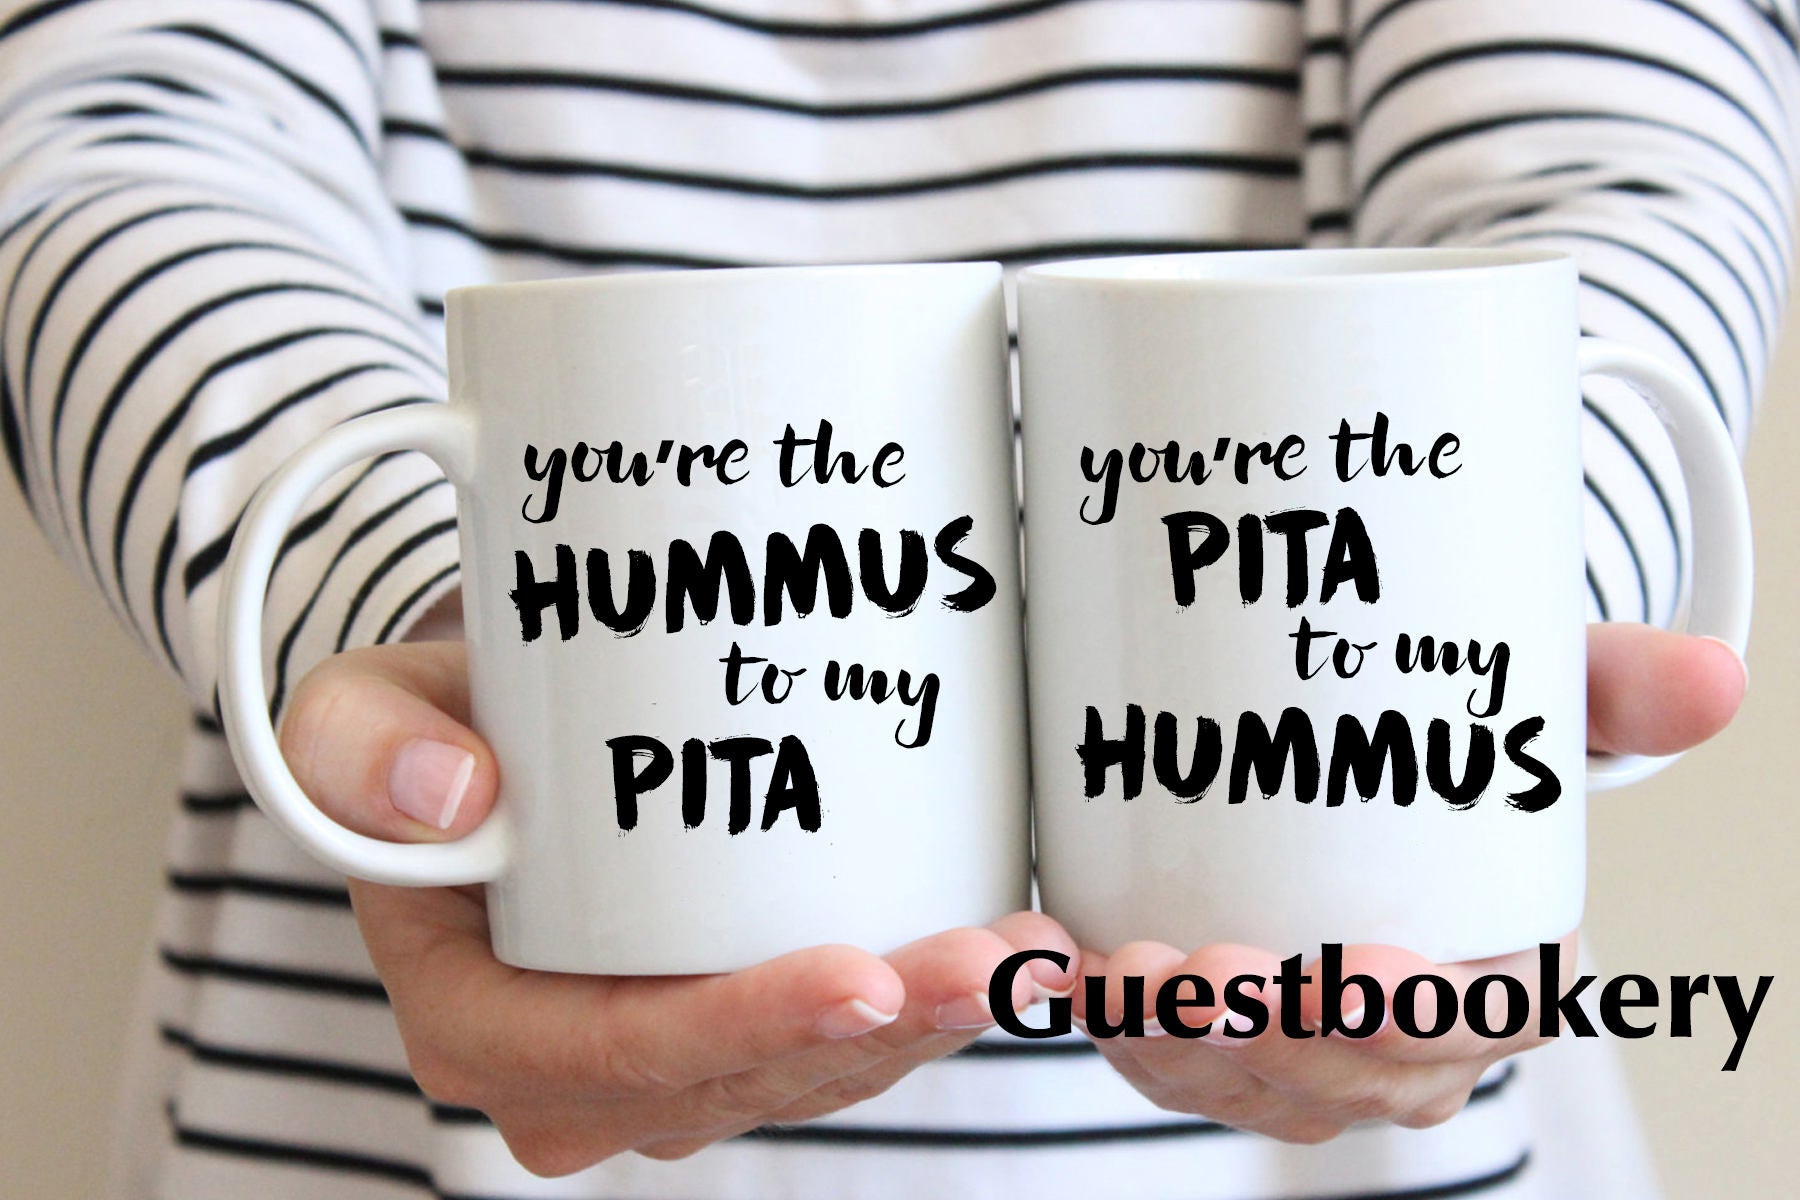 Hummus and Pita Mugs